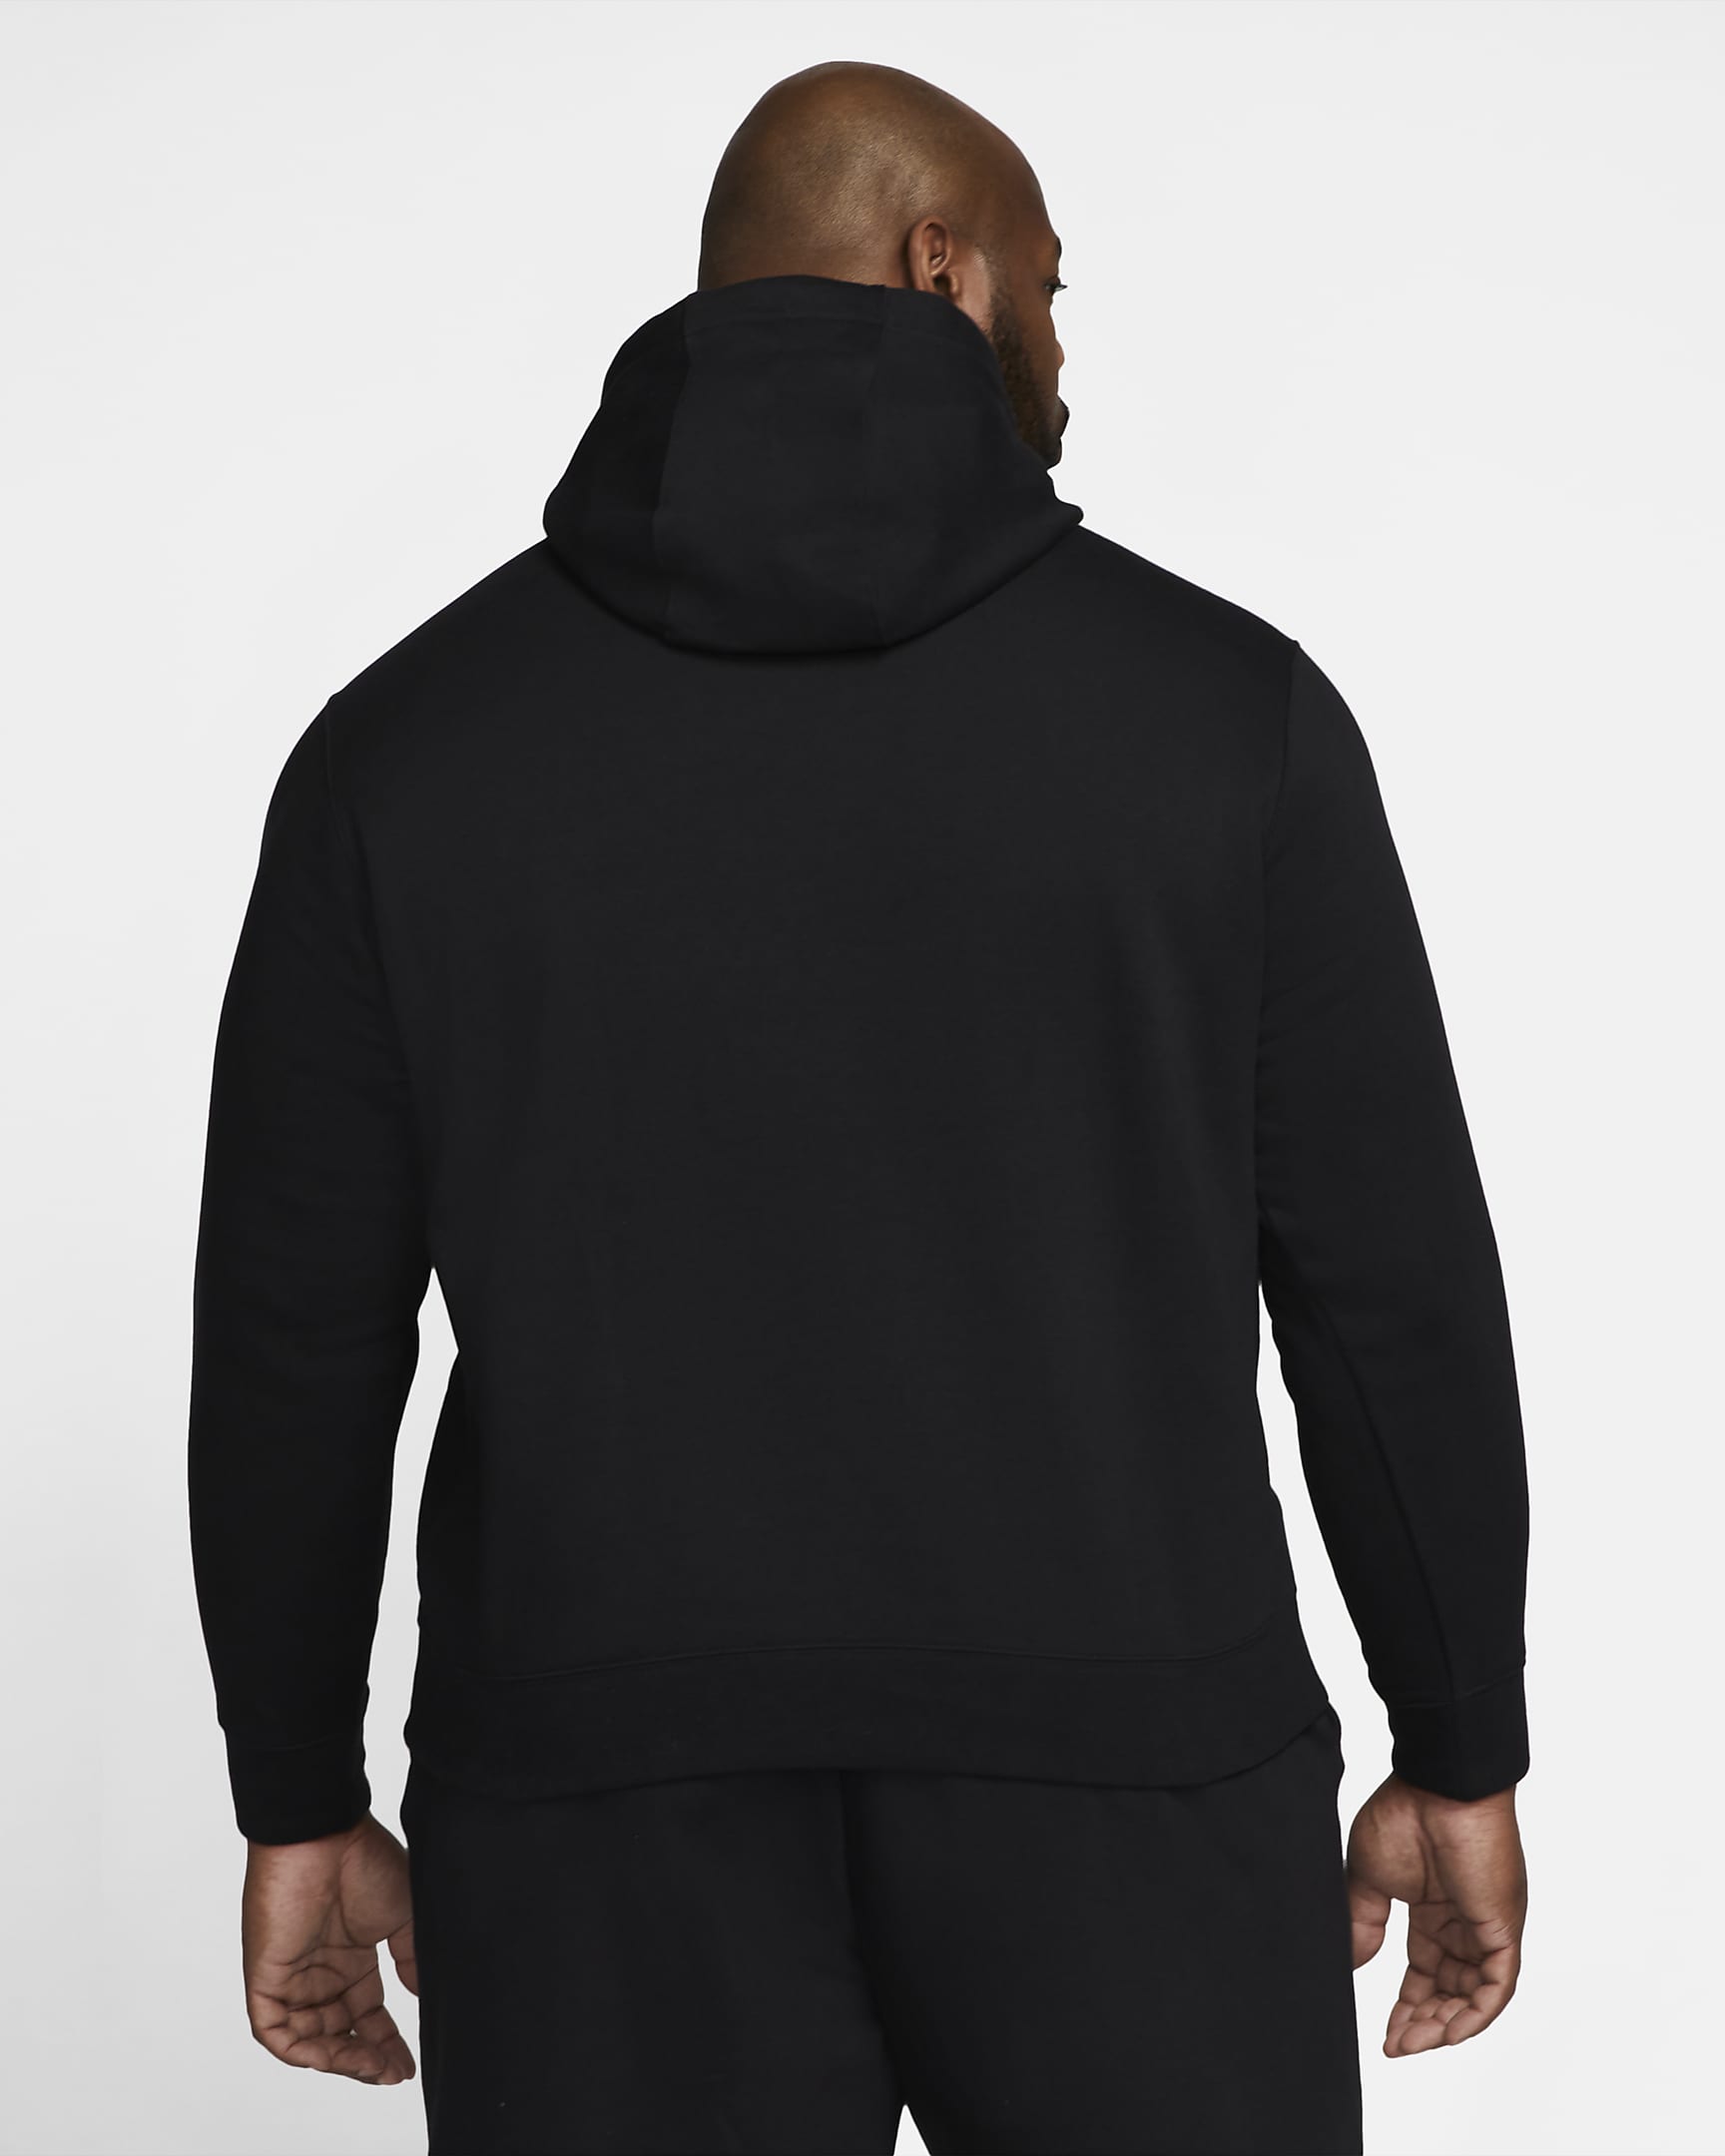 Nike Sportswear Club Fleece Pullover Hoodie - Black/Black/White